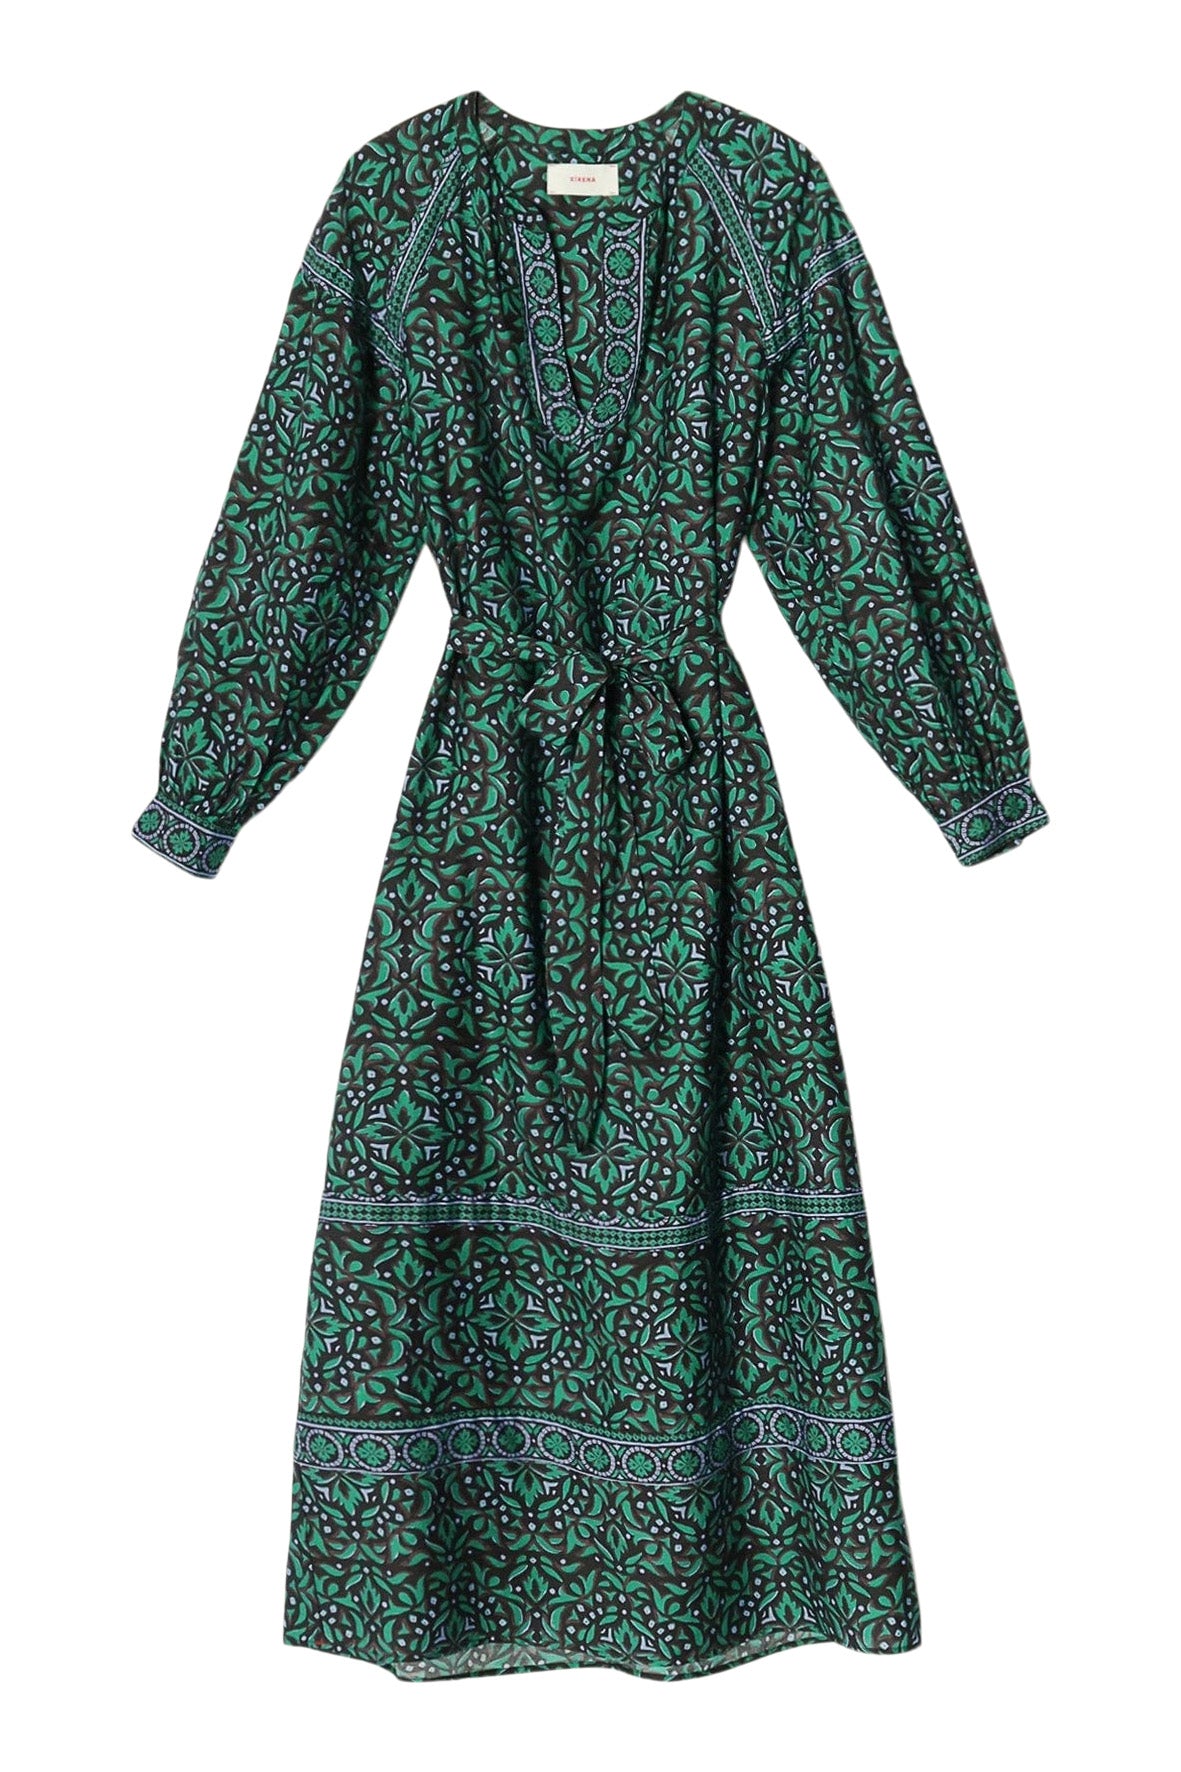 Xirena Isobel Dress in Green Smoke